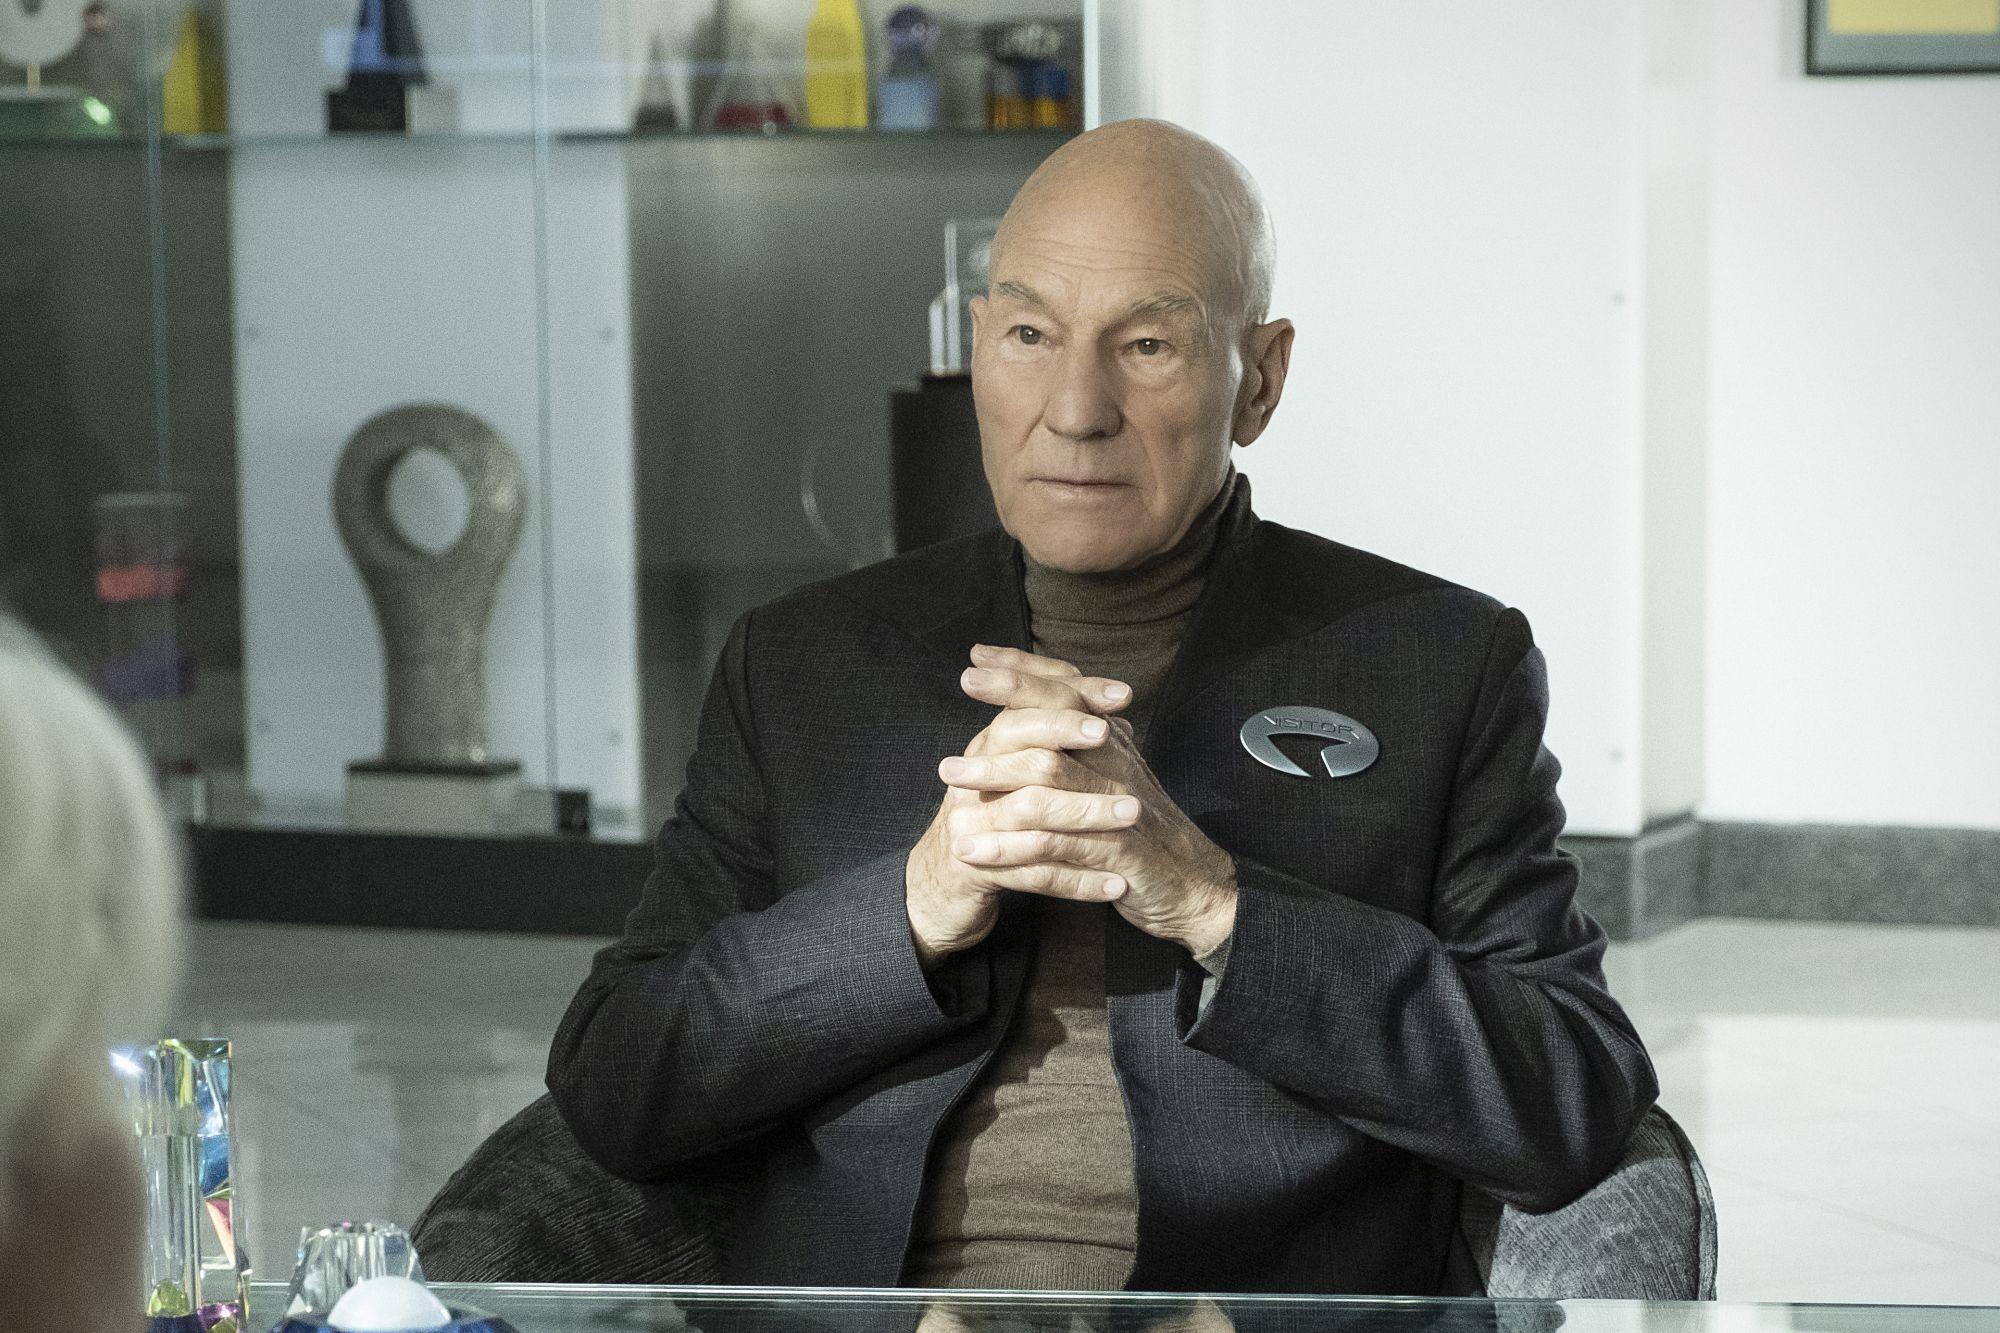 Star Trek: Picard' Comic Con Brings Back Familiar